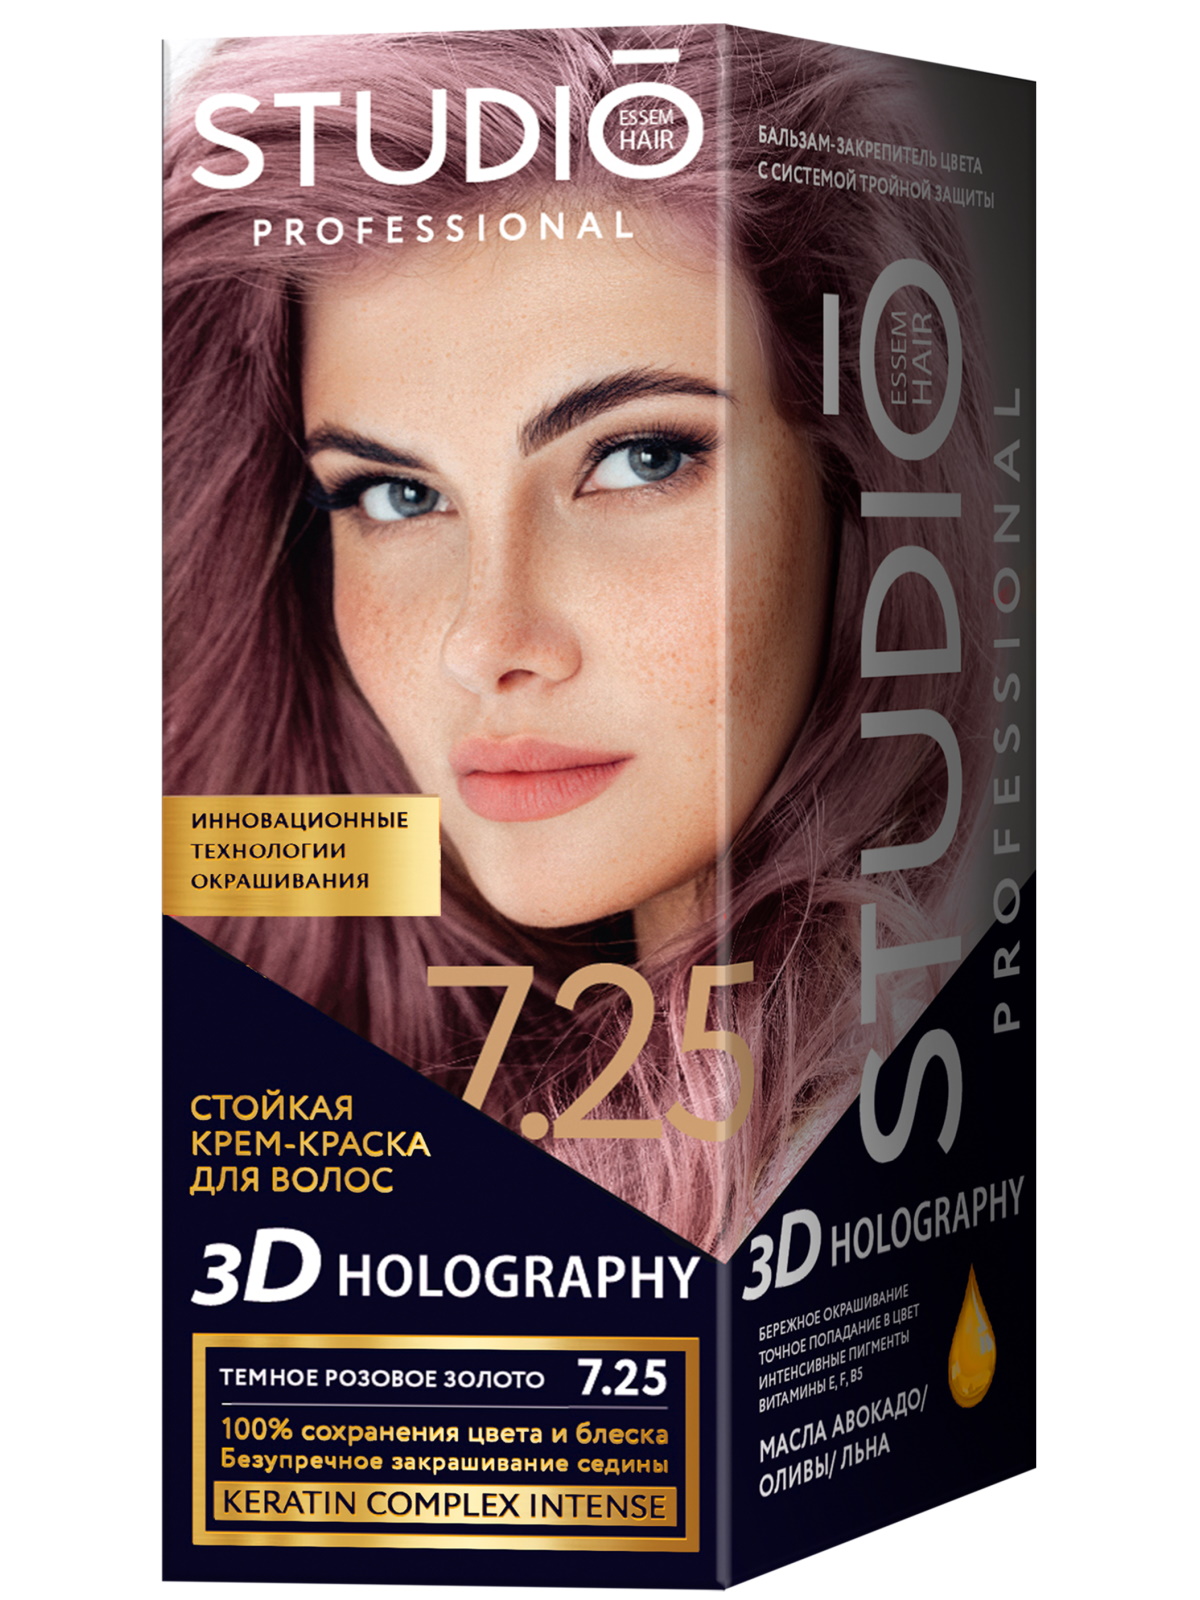 Комплект 3D HOLOGRAPHY STUDIO PROFESSIONAL 7.25 темное розовое золото 2*50+15 мл комплект 3d holography studio professional 5 54 махагон 2 50 15 мл